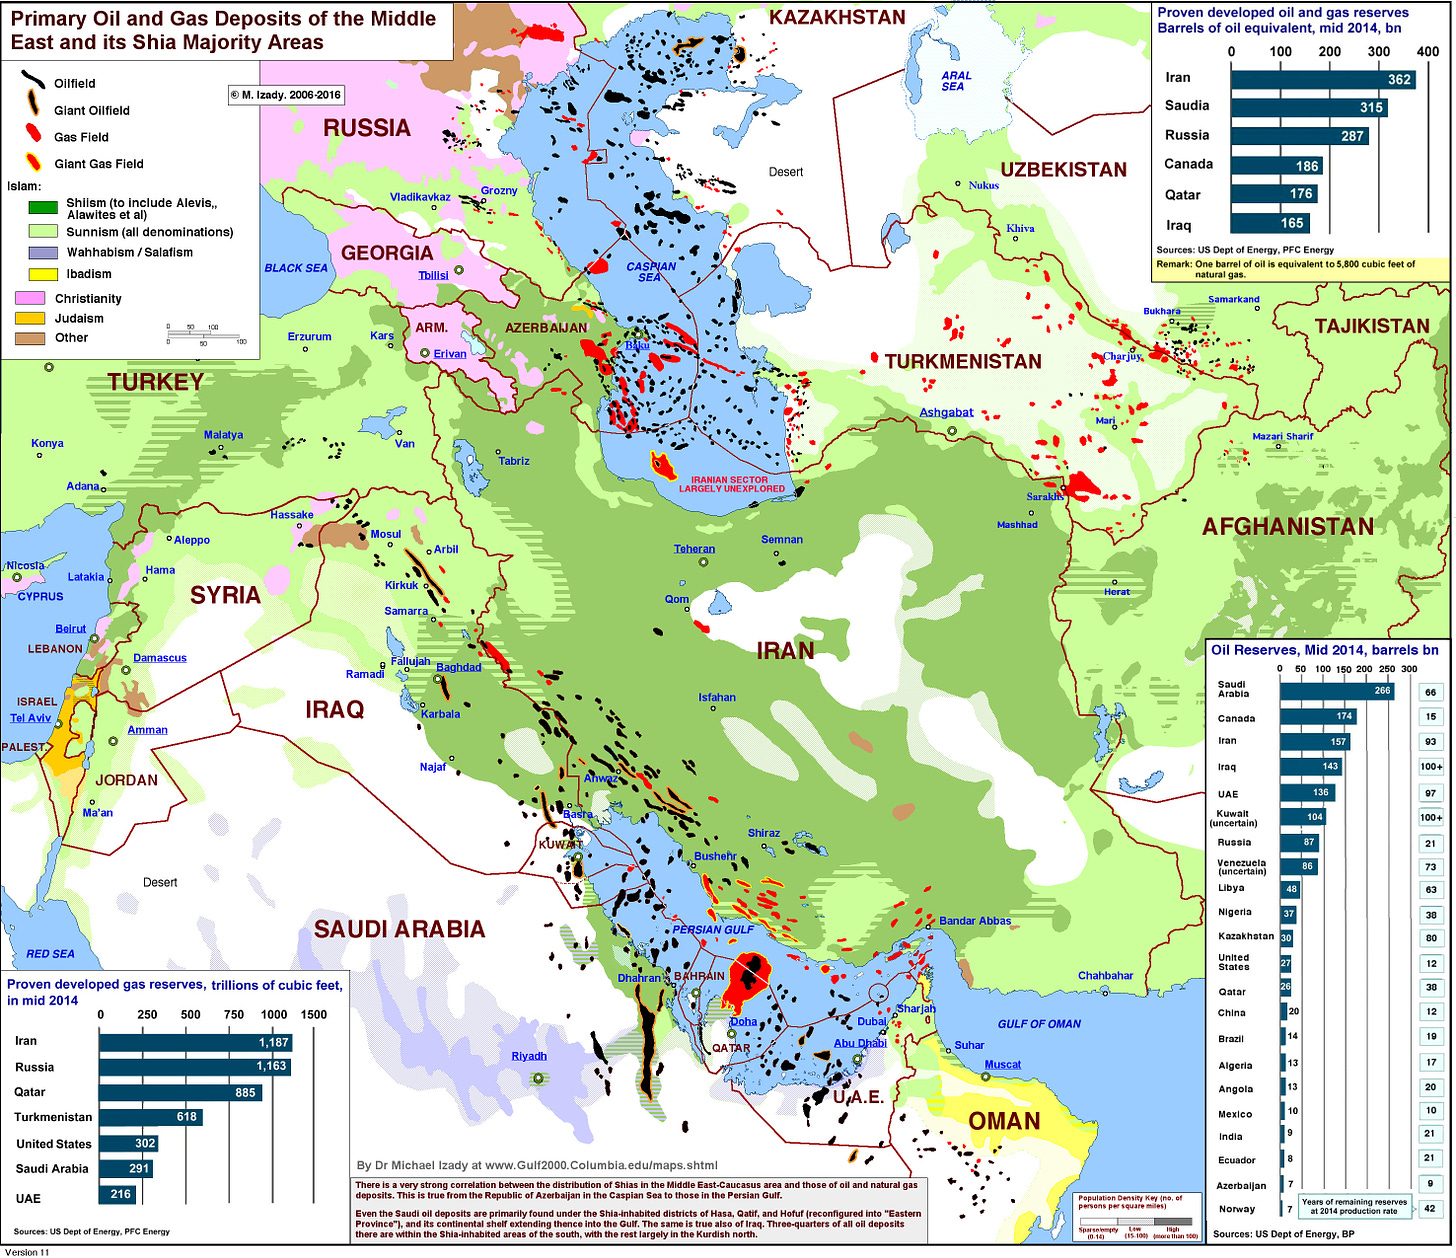 One Map That Explains the Dangerous Saudi-Iranian Conflict